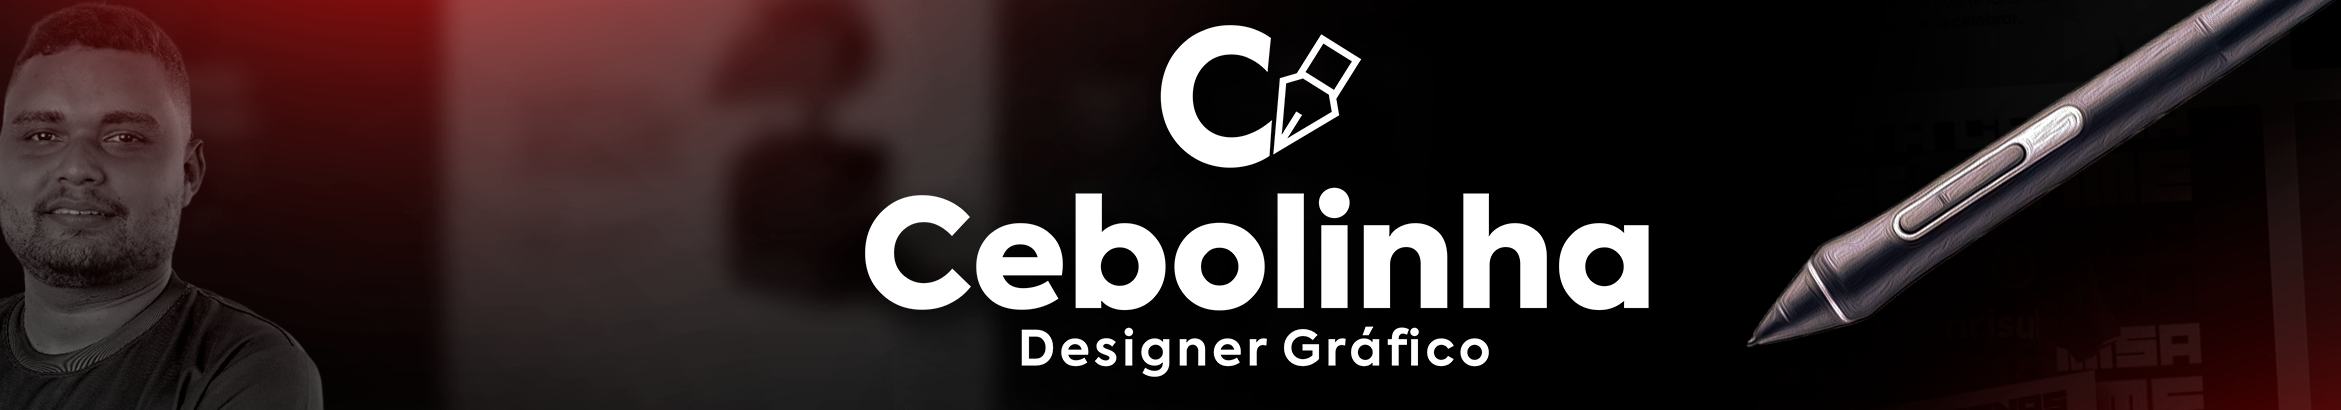 Cebolinha Designer's profile banner